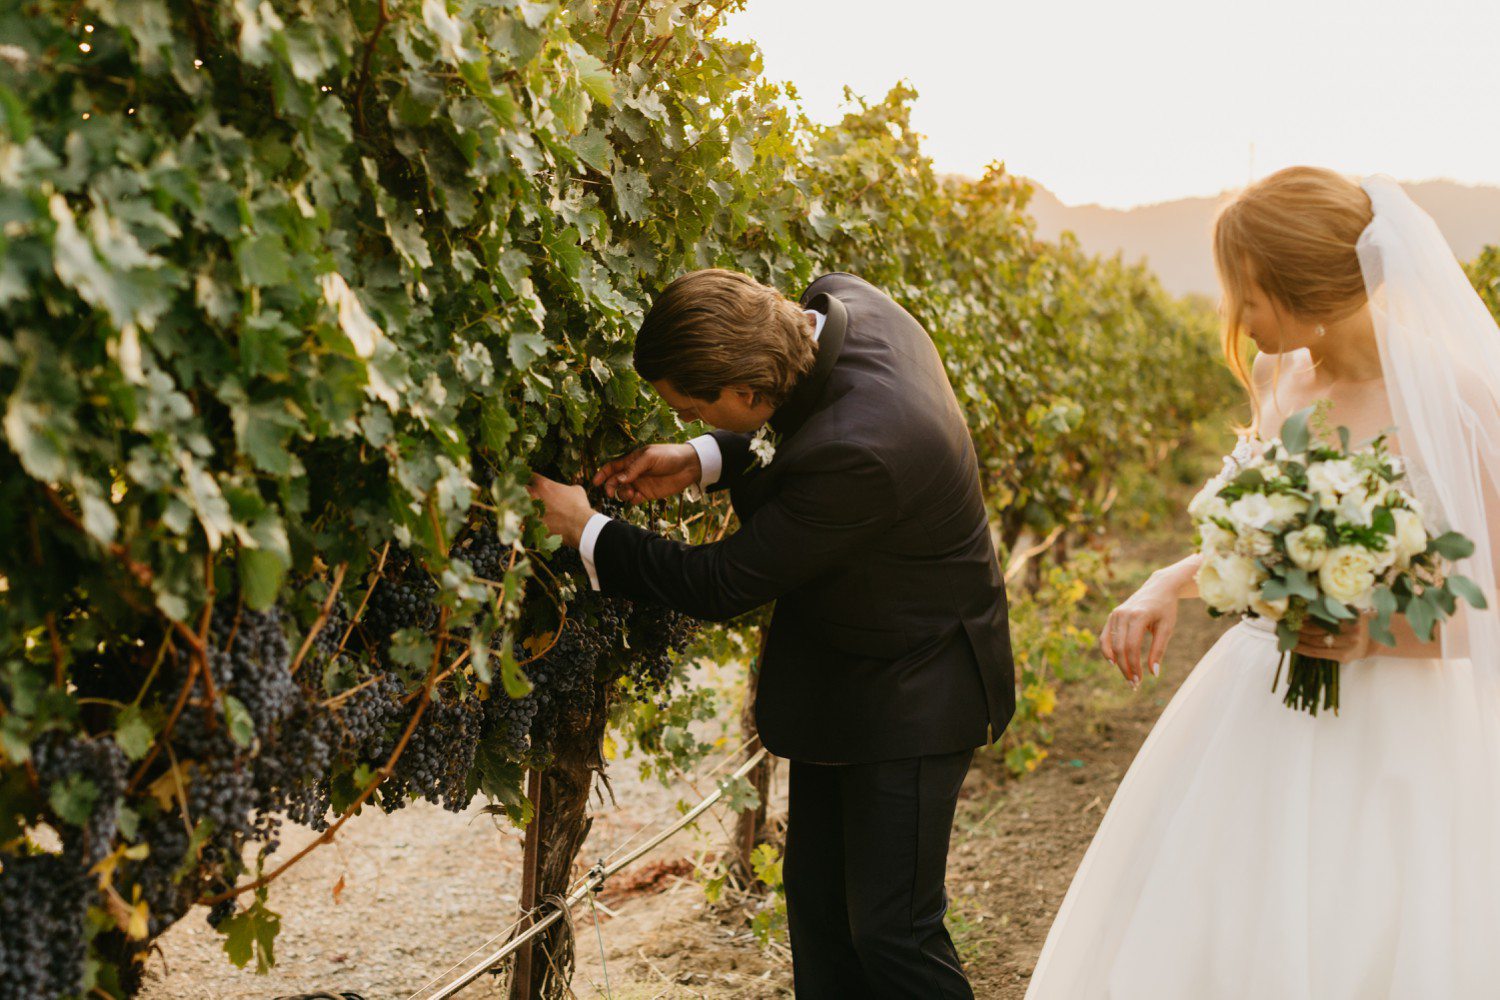 Groom picking grapes at winery wedding 